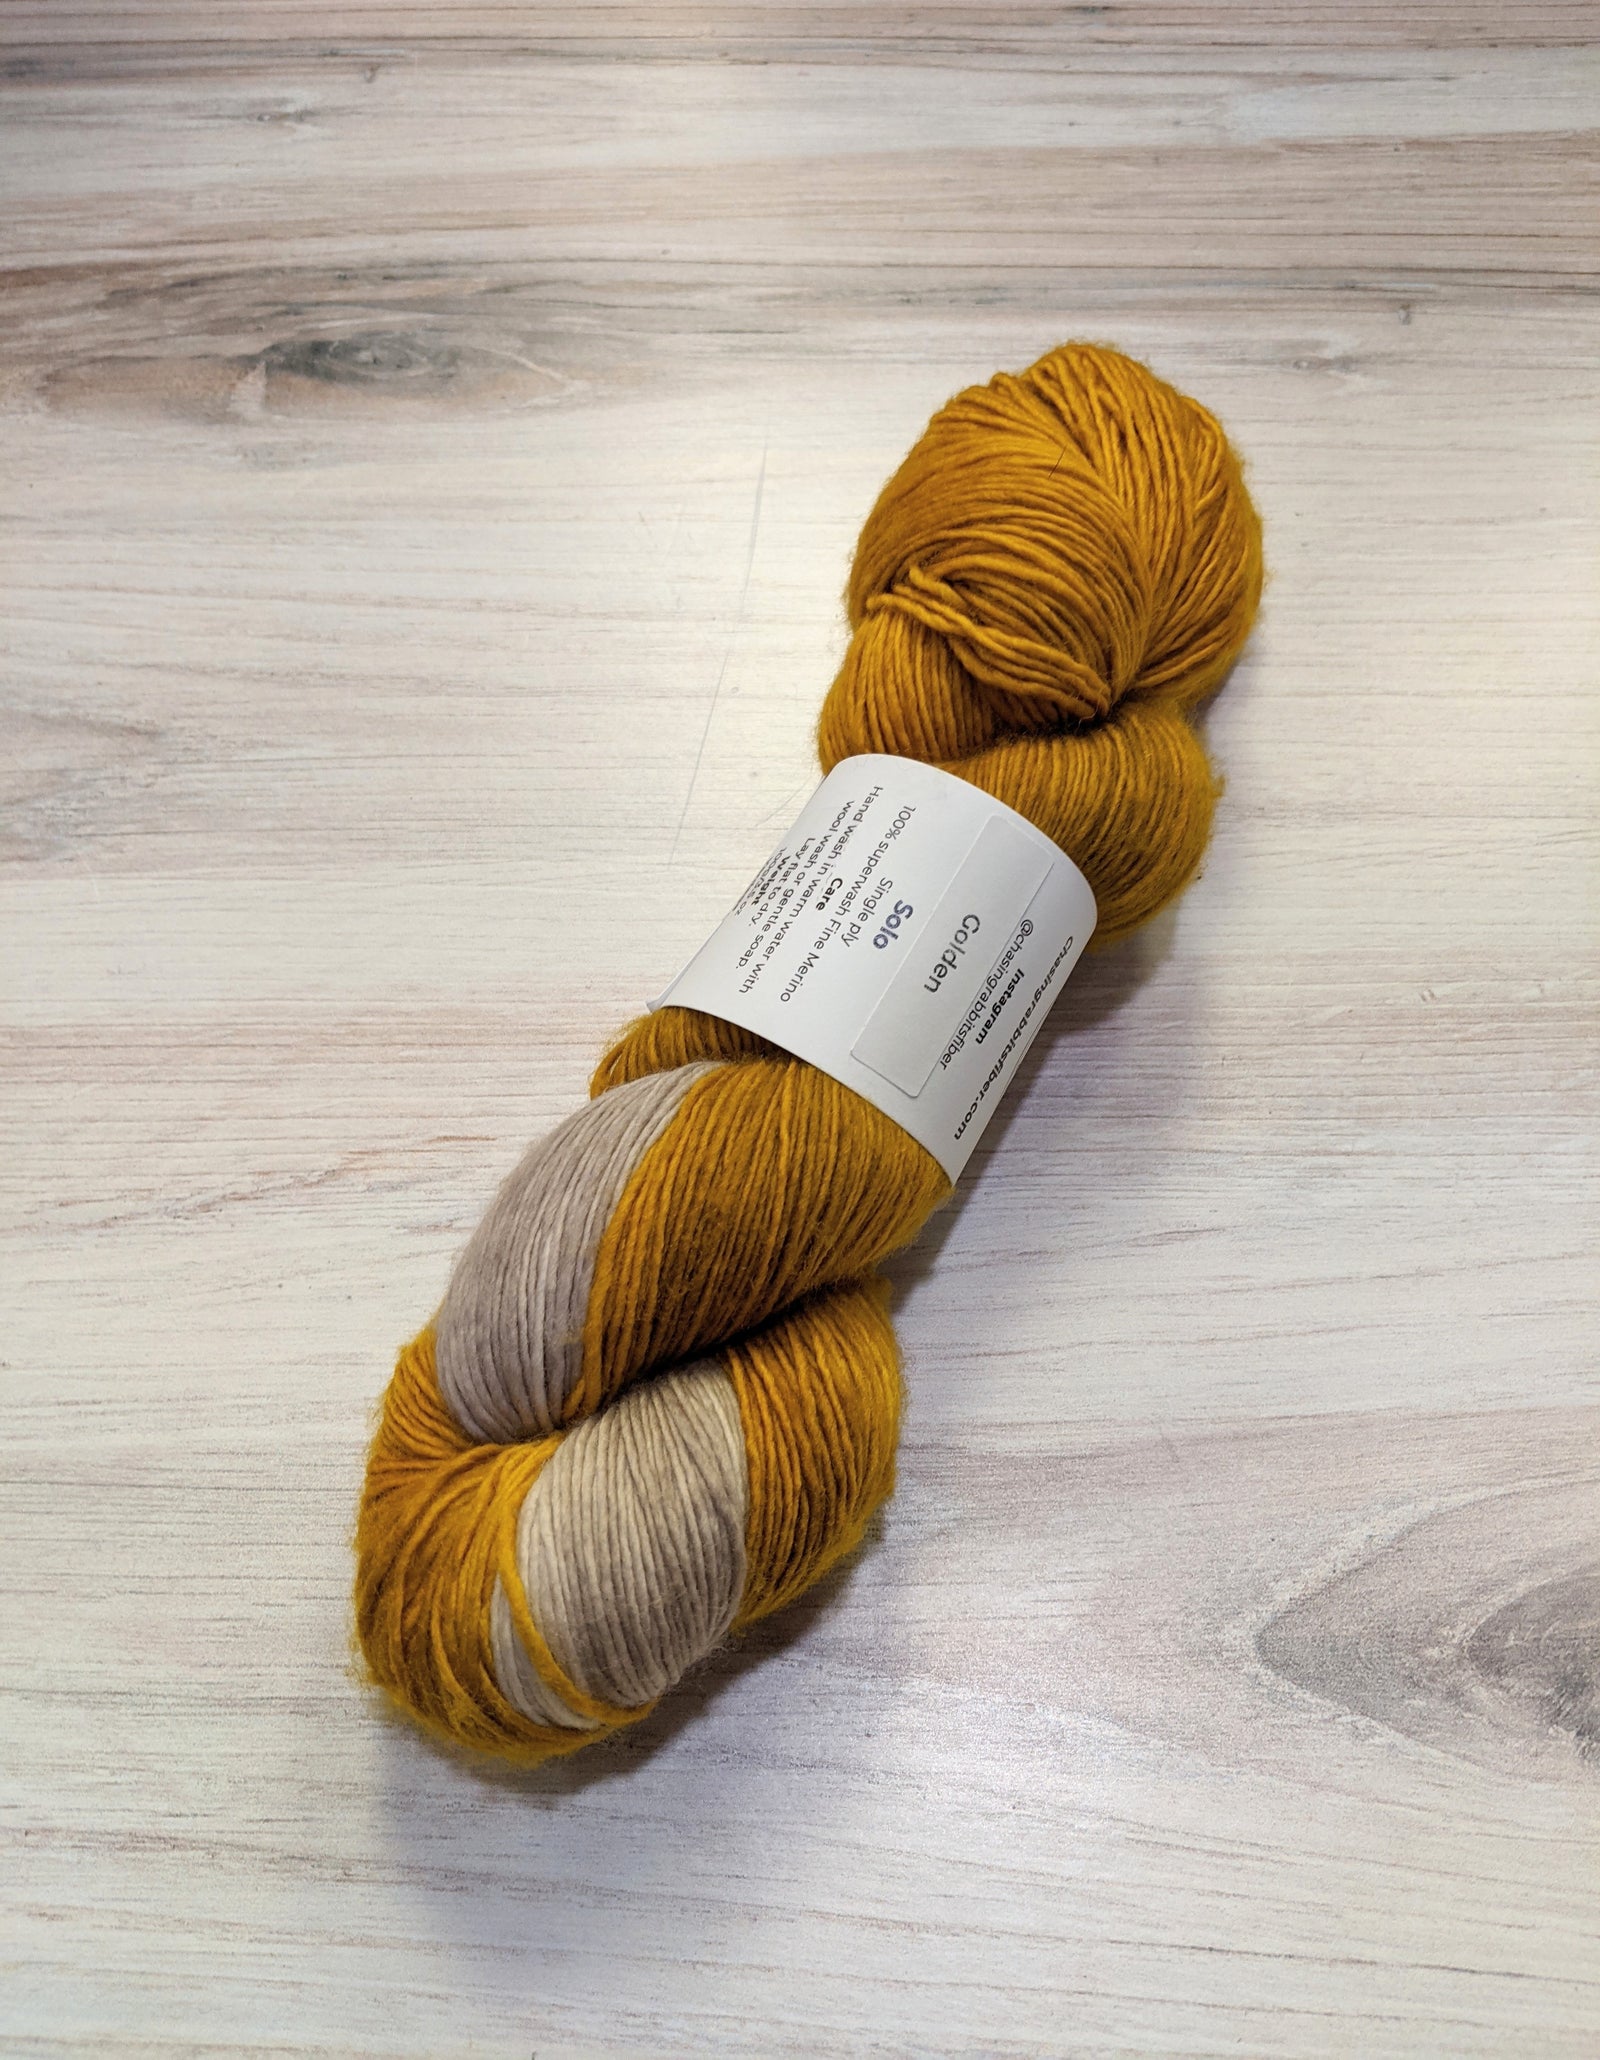 Woobles Beginning Crochet Kits – McWalker Yarns